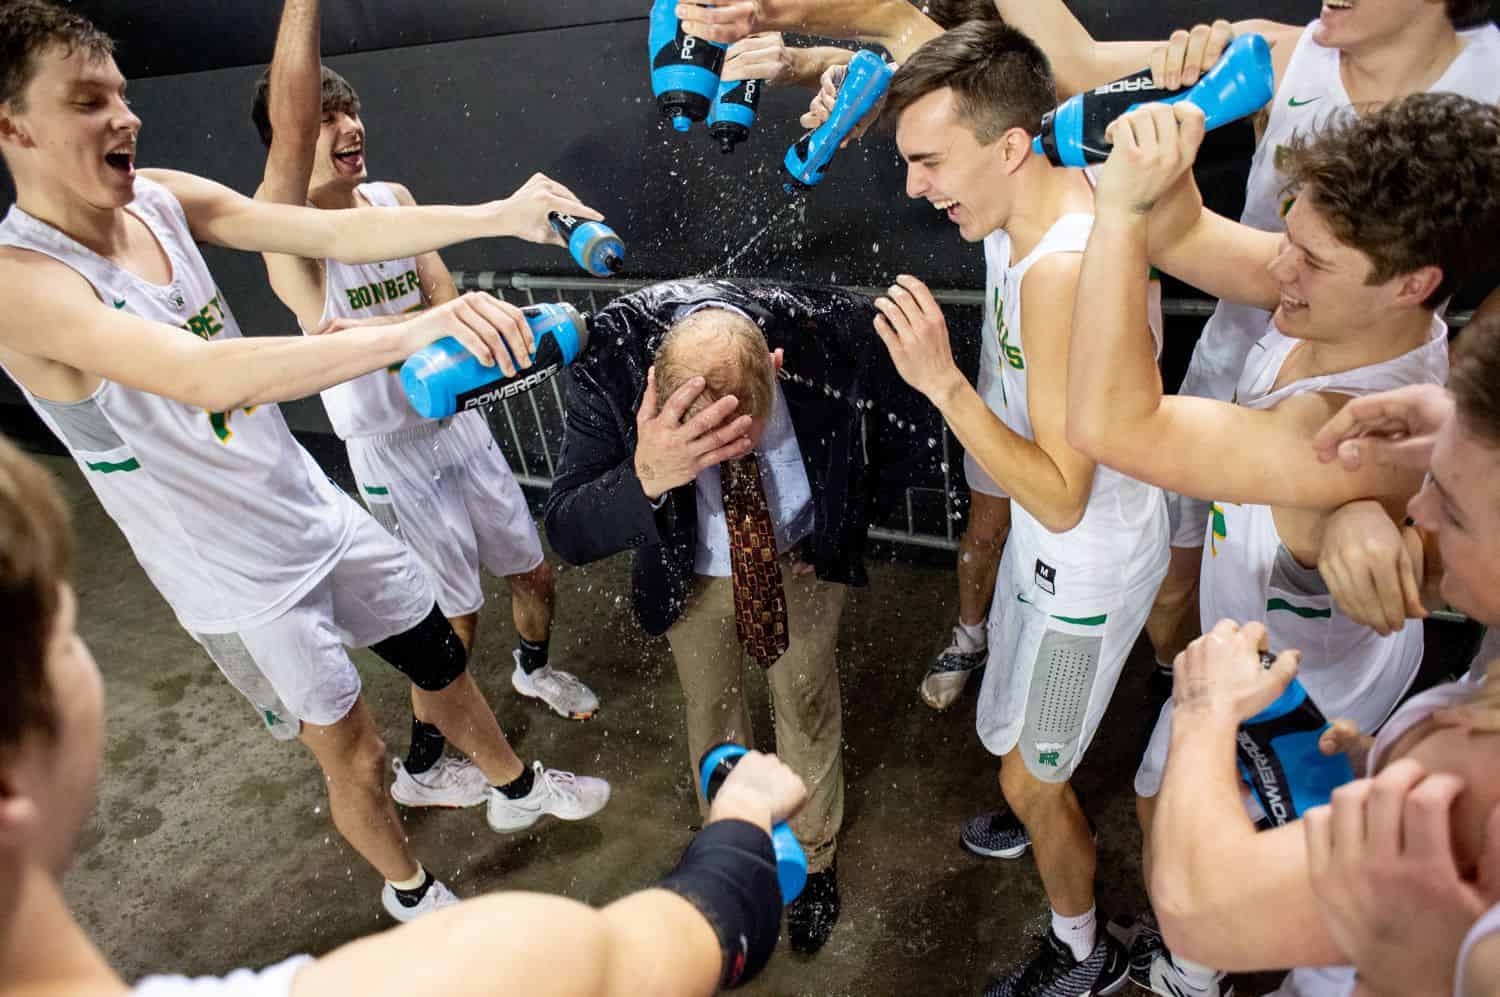 A boys high school basketball team drenches their coach in Gatorade after a big win